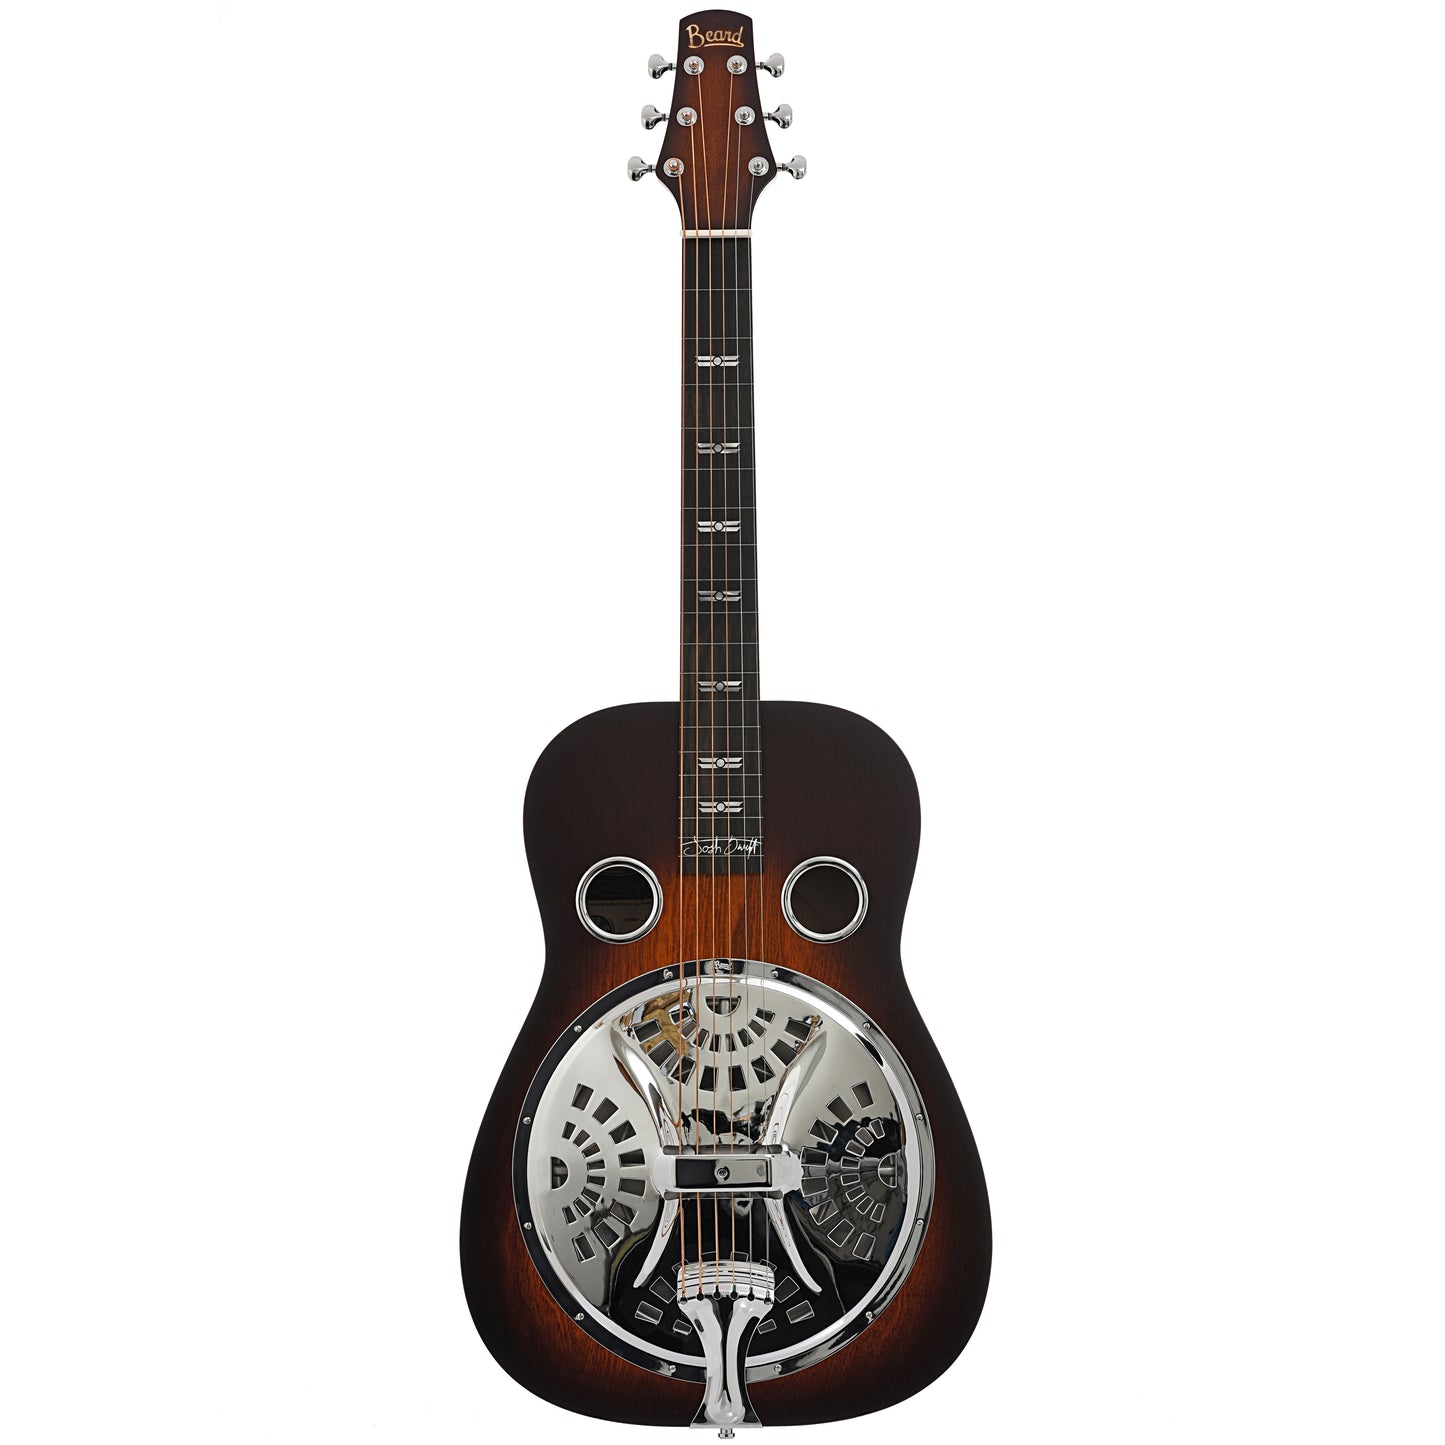 Full front of Beard Josh Swift Standard Squareneck Resonator Guitar with Signature Inlays